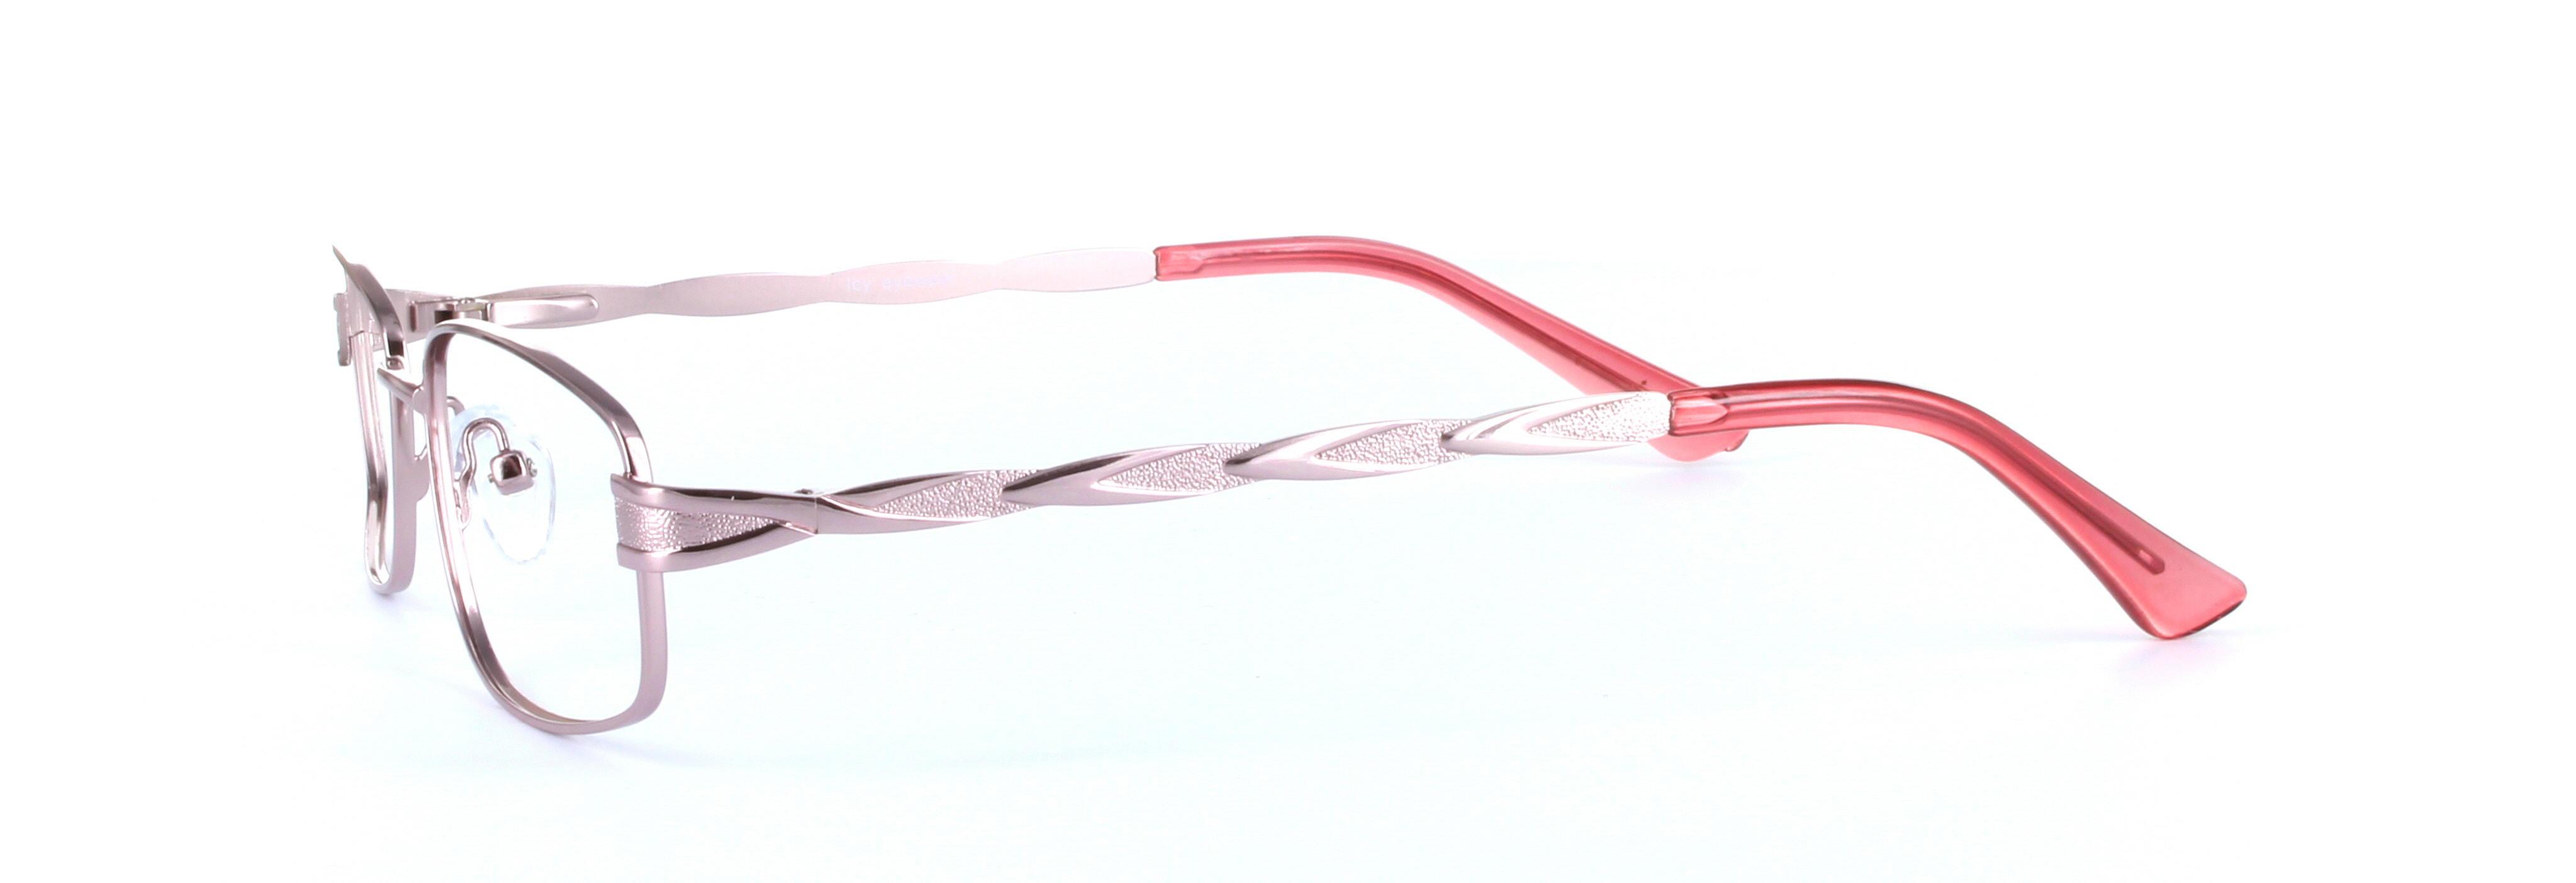 Anna Pink Full Rim Oval Rectangular Metal Glasses - Image View 2